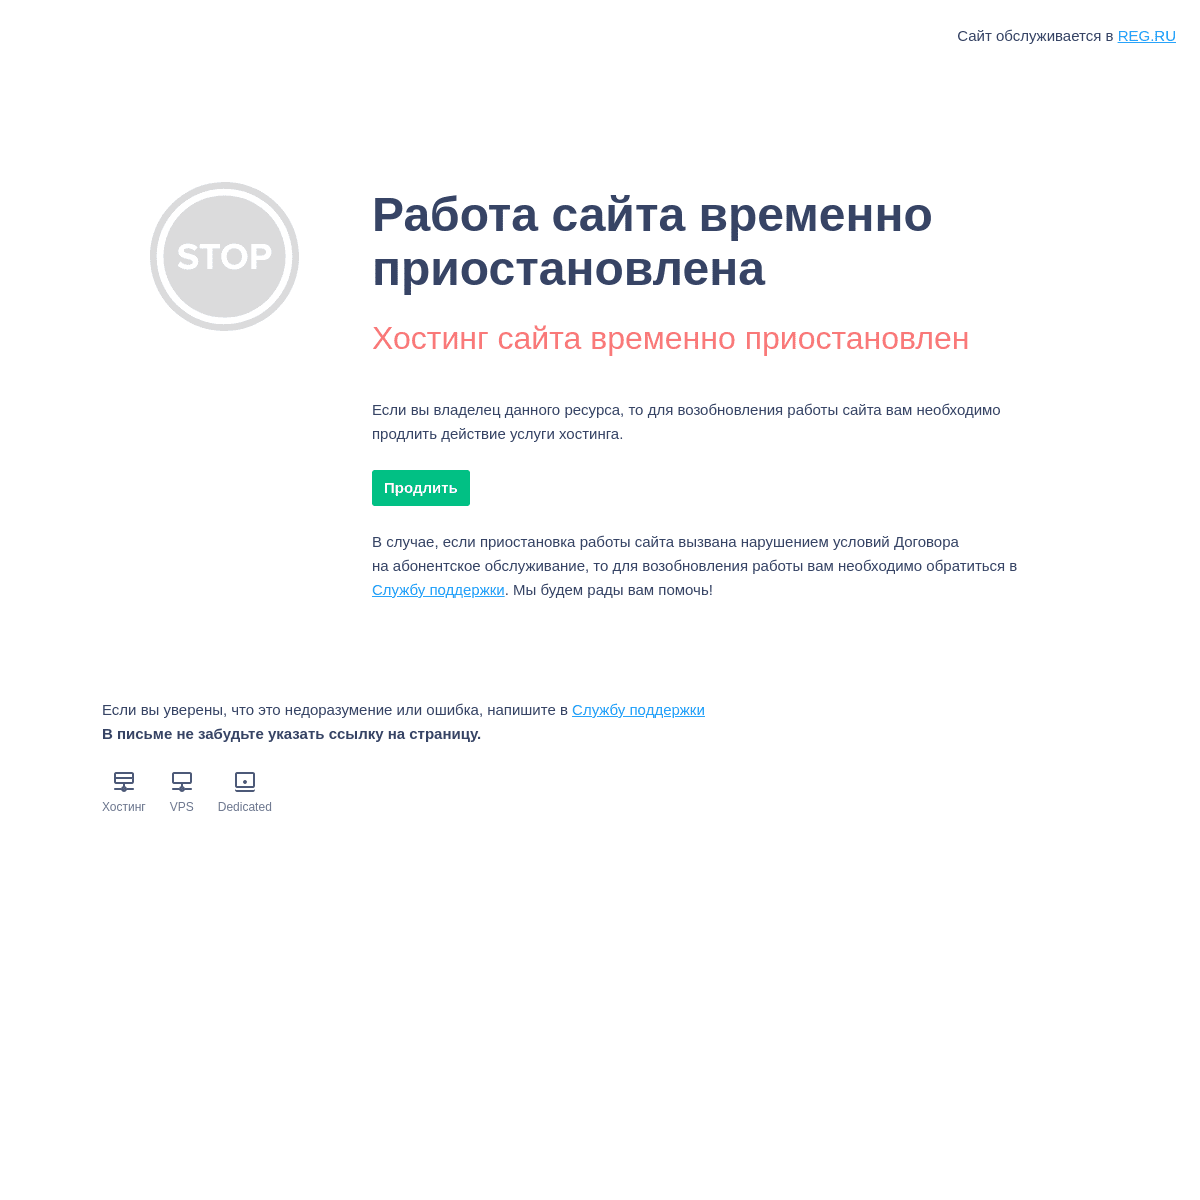 A complete backup of https://fellari.ru